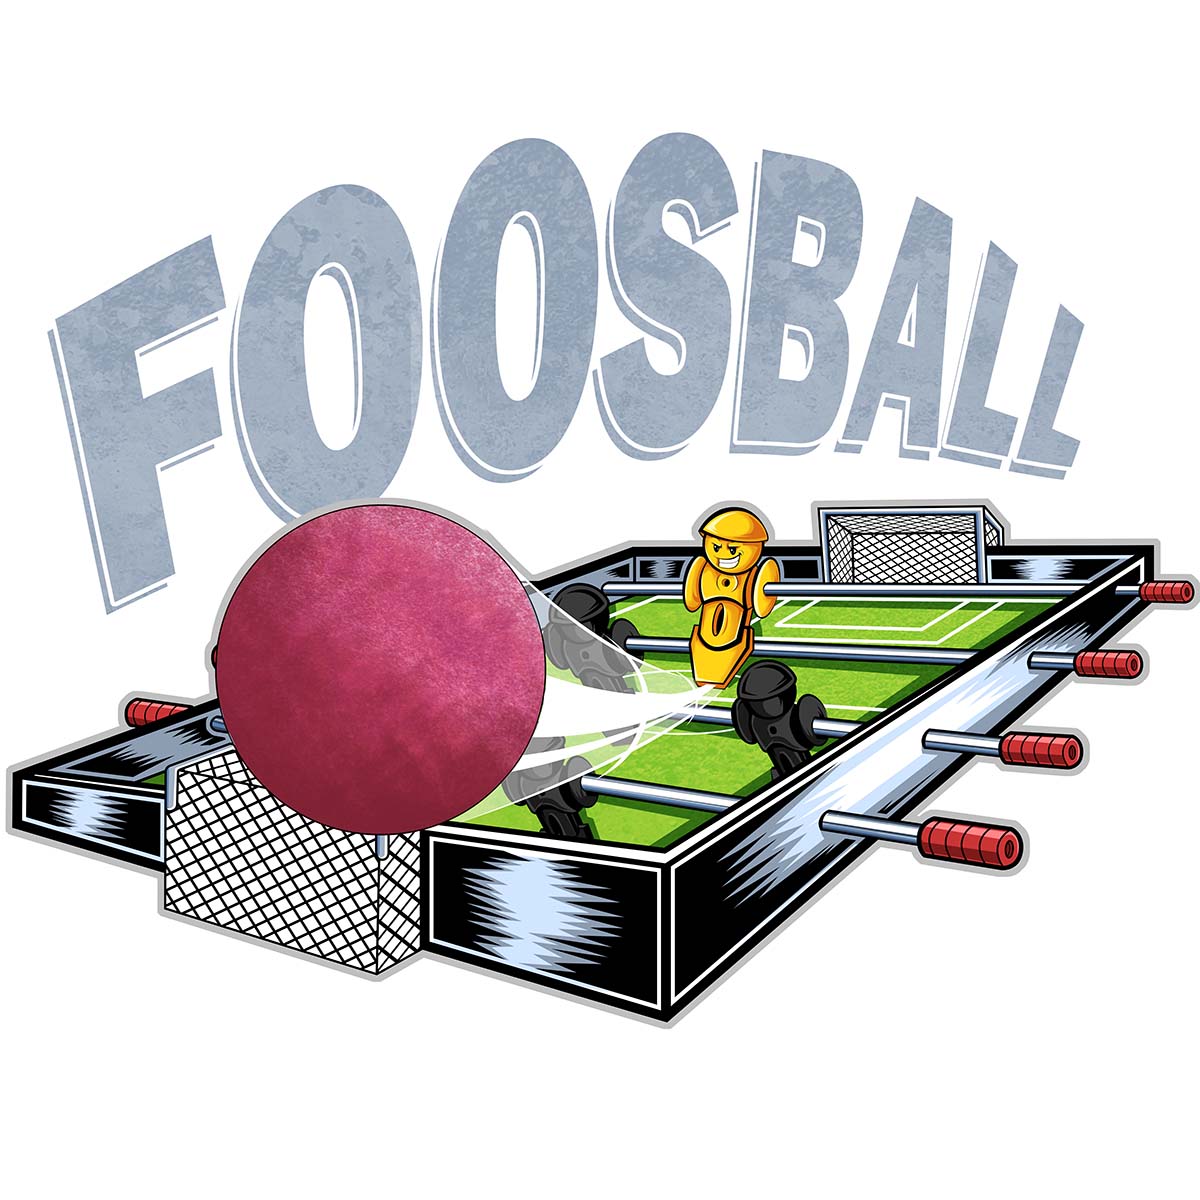 Foosball Table - Next Level